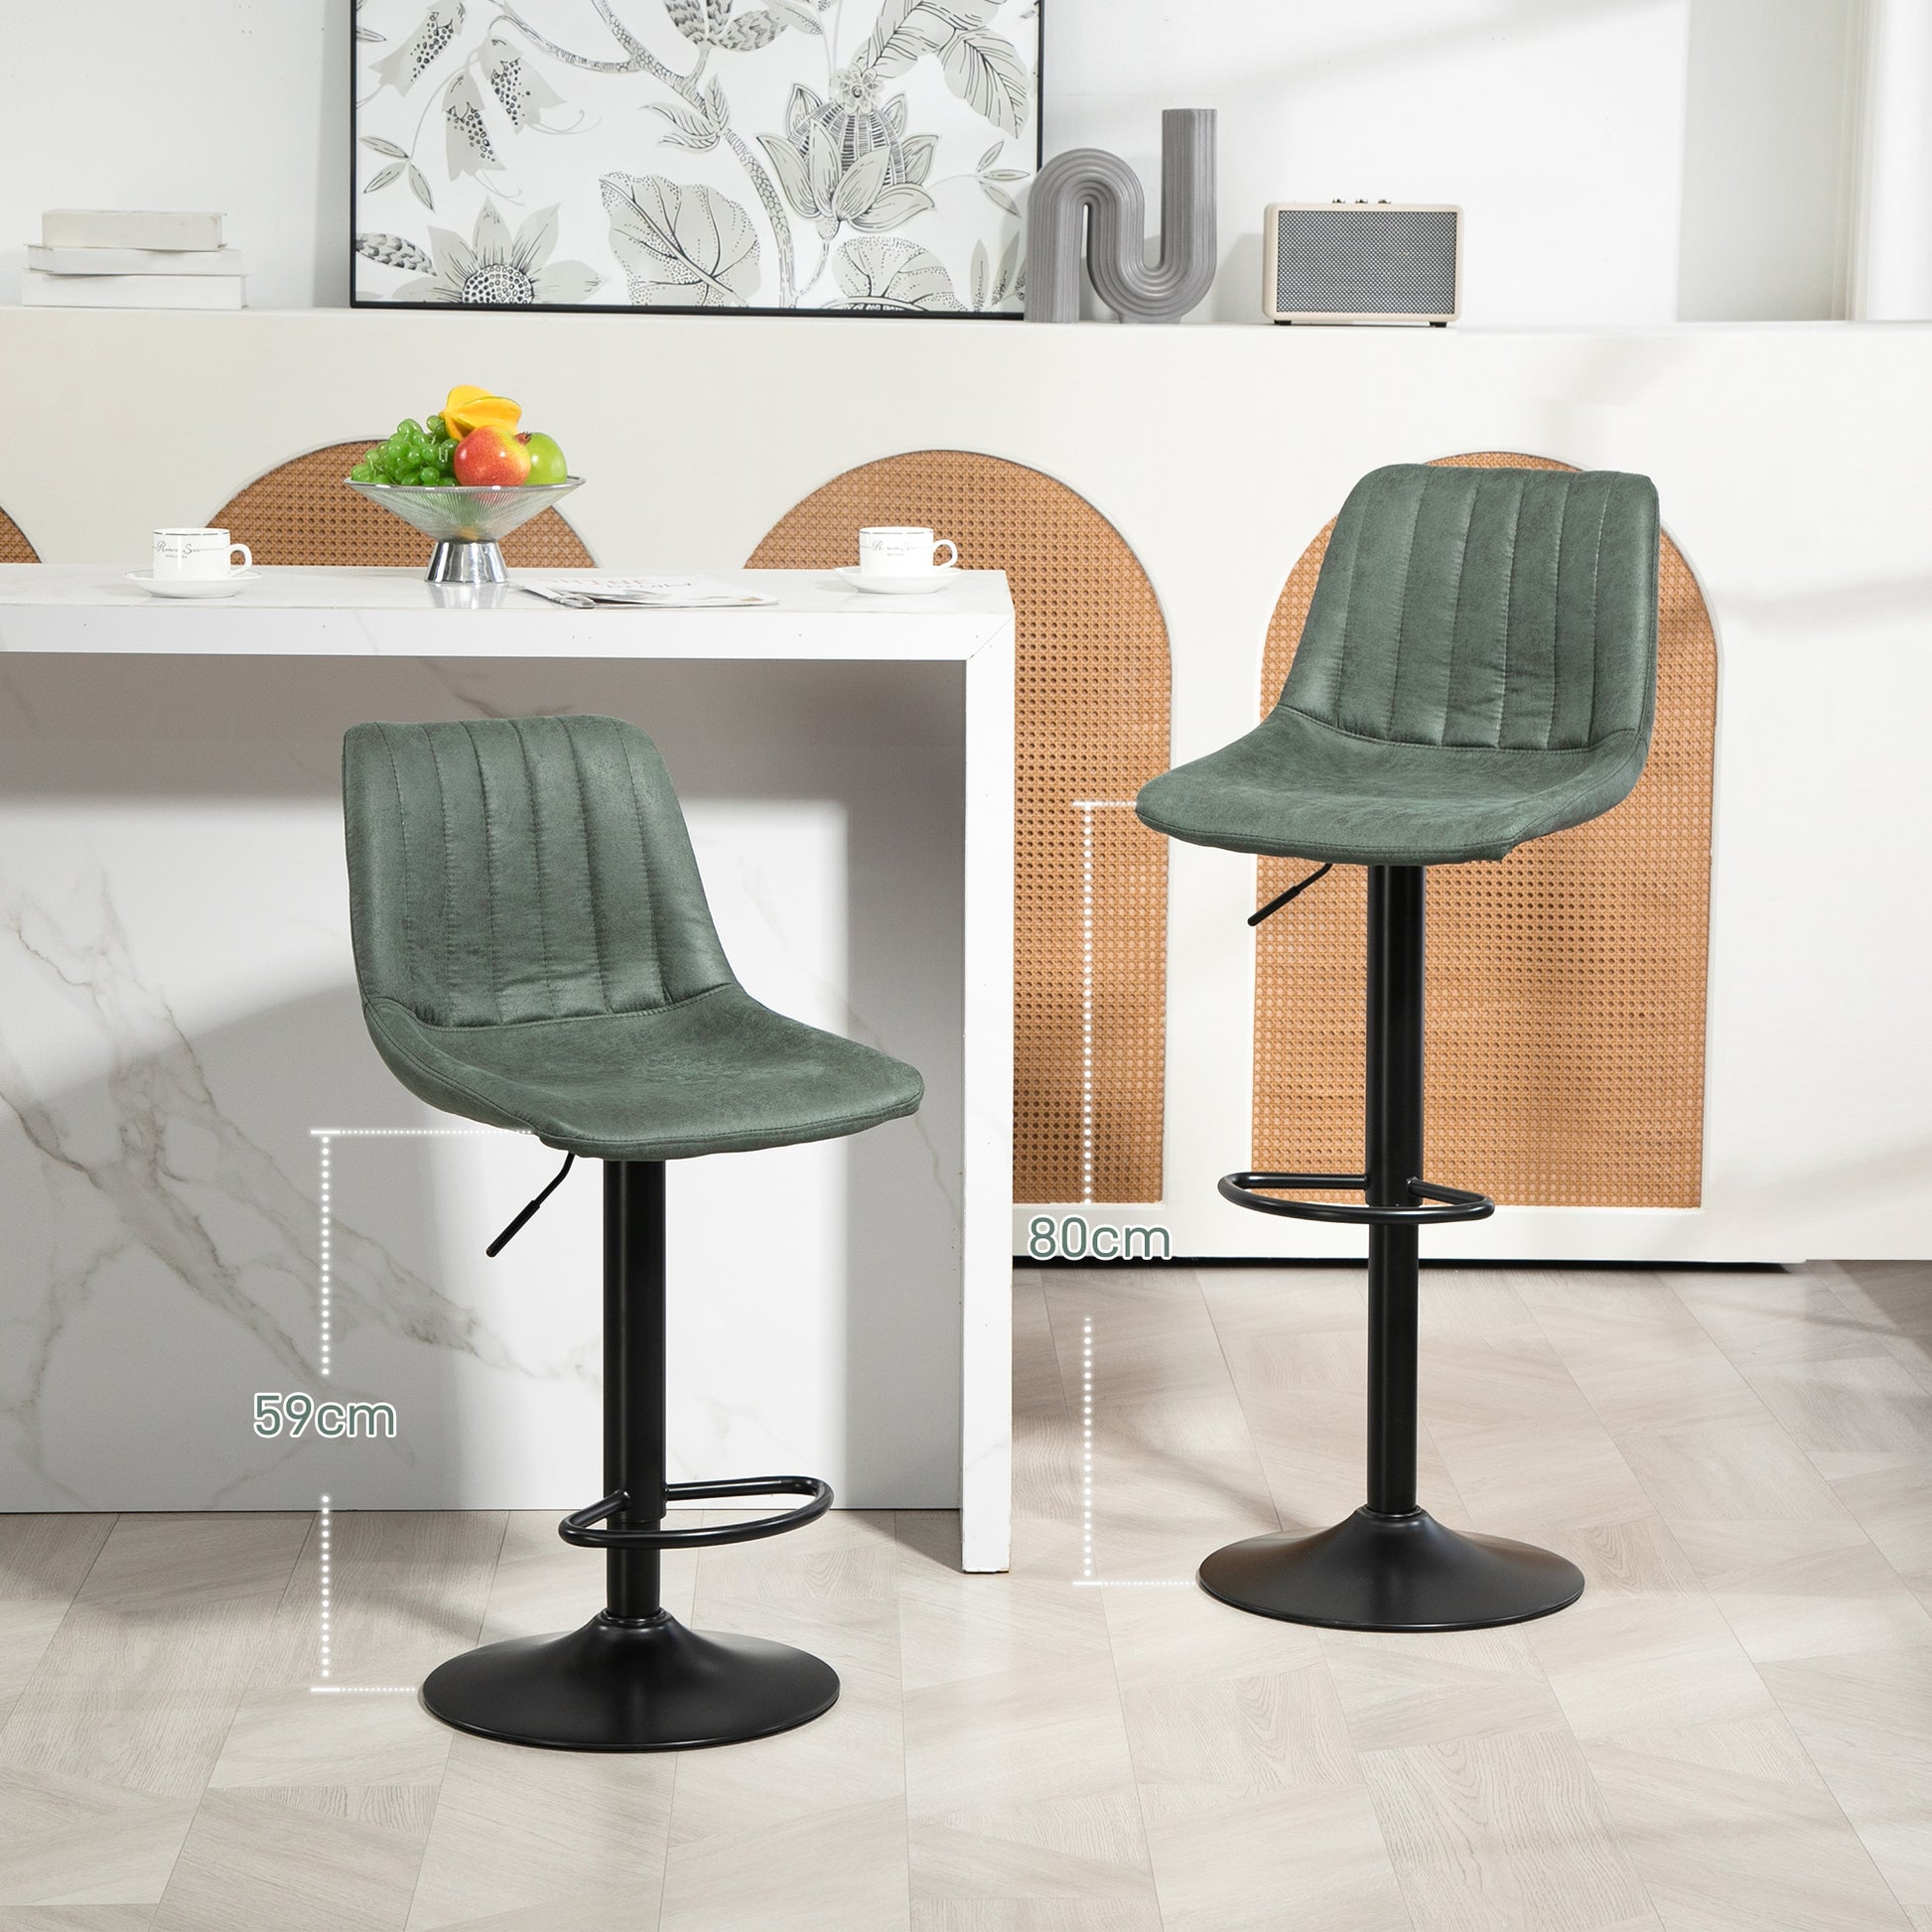 Adjustable Bar Stools Set of 2 Counter Height, Kitchen Bar Stools Dining Chairs 360° Swivel, Green, HOMCOM, 2